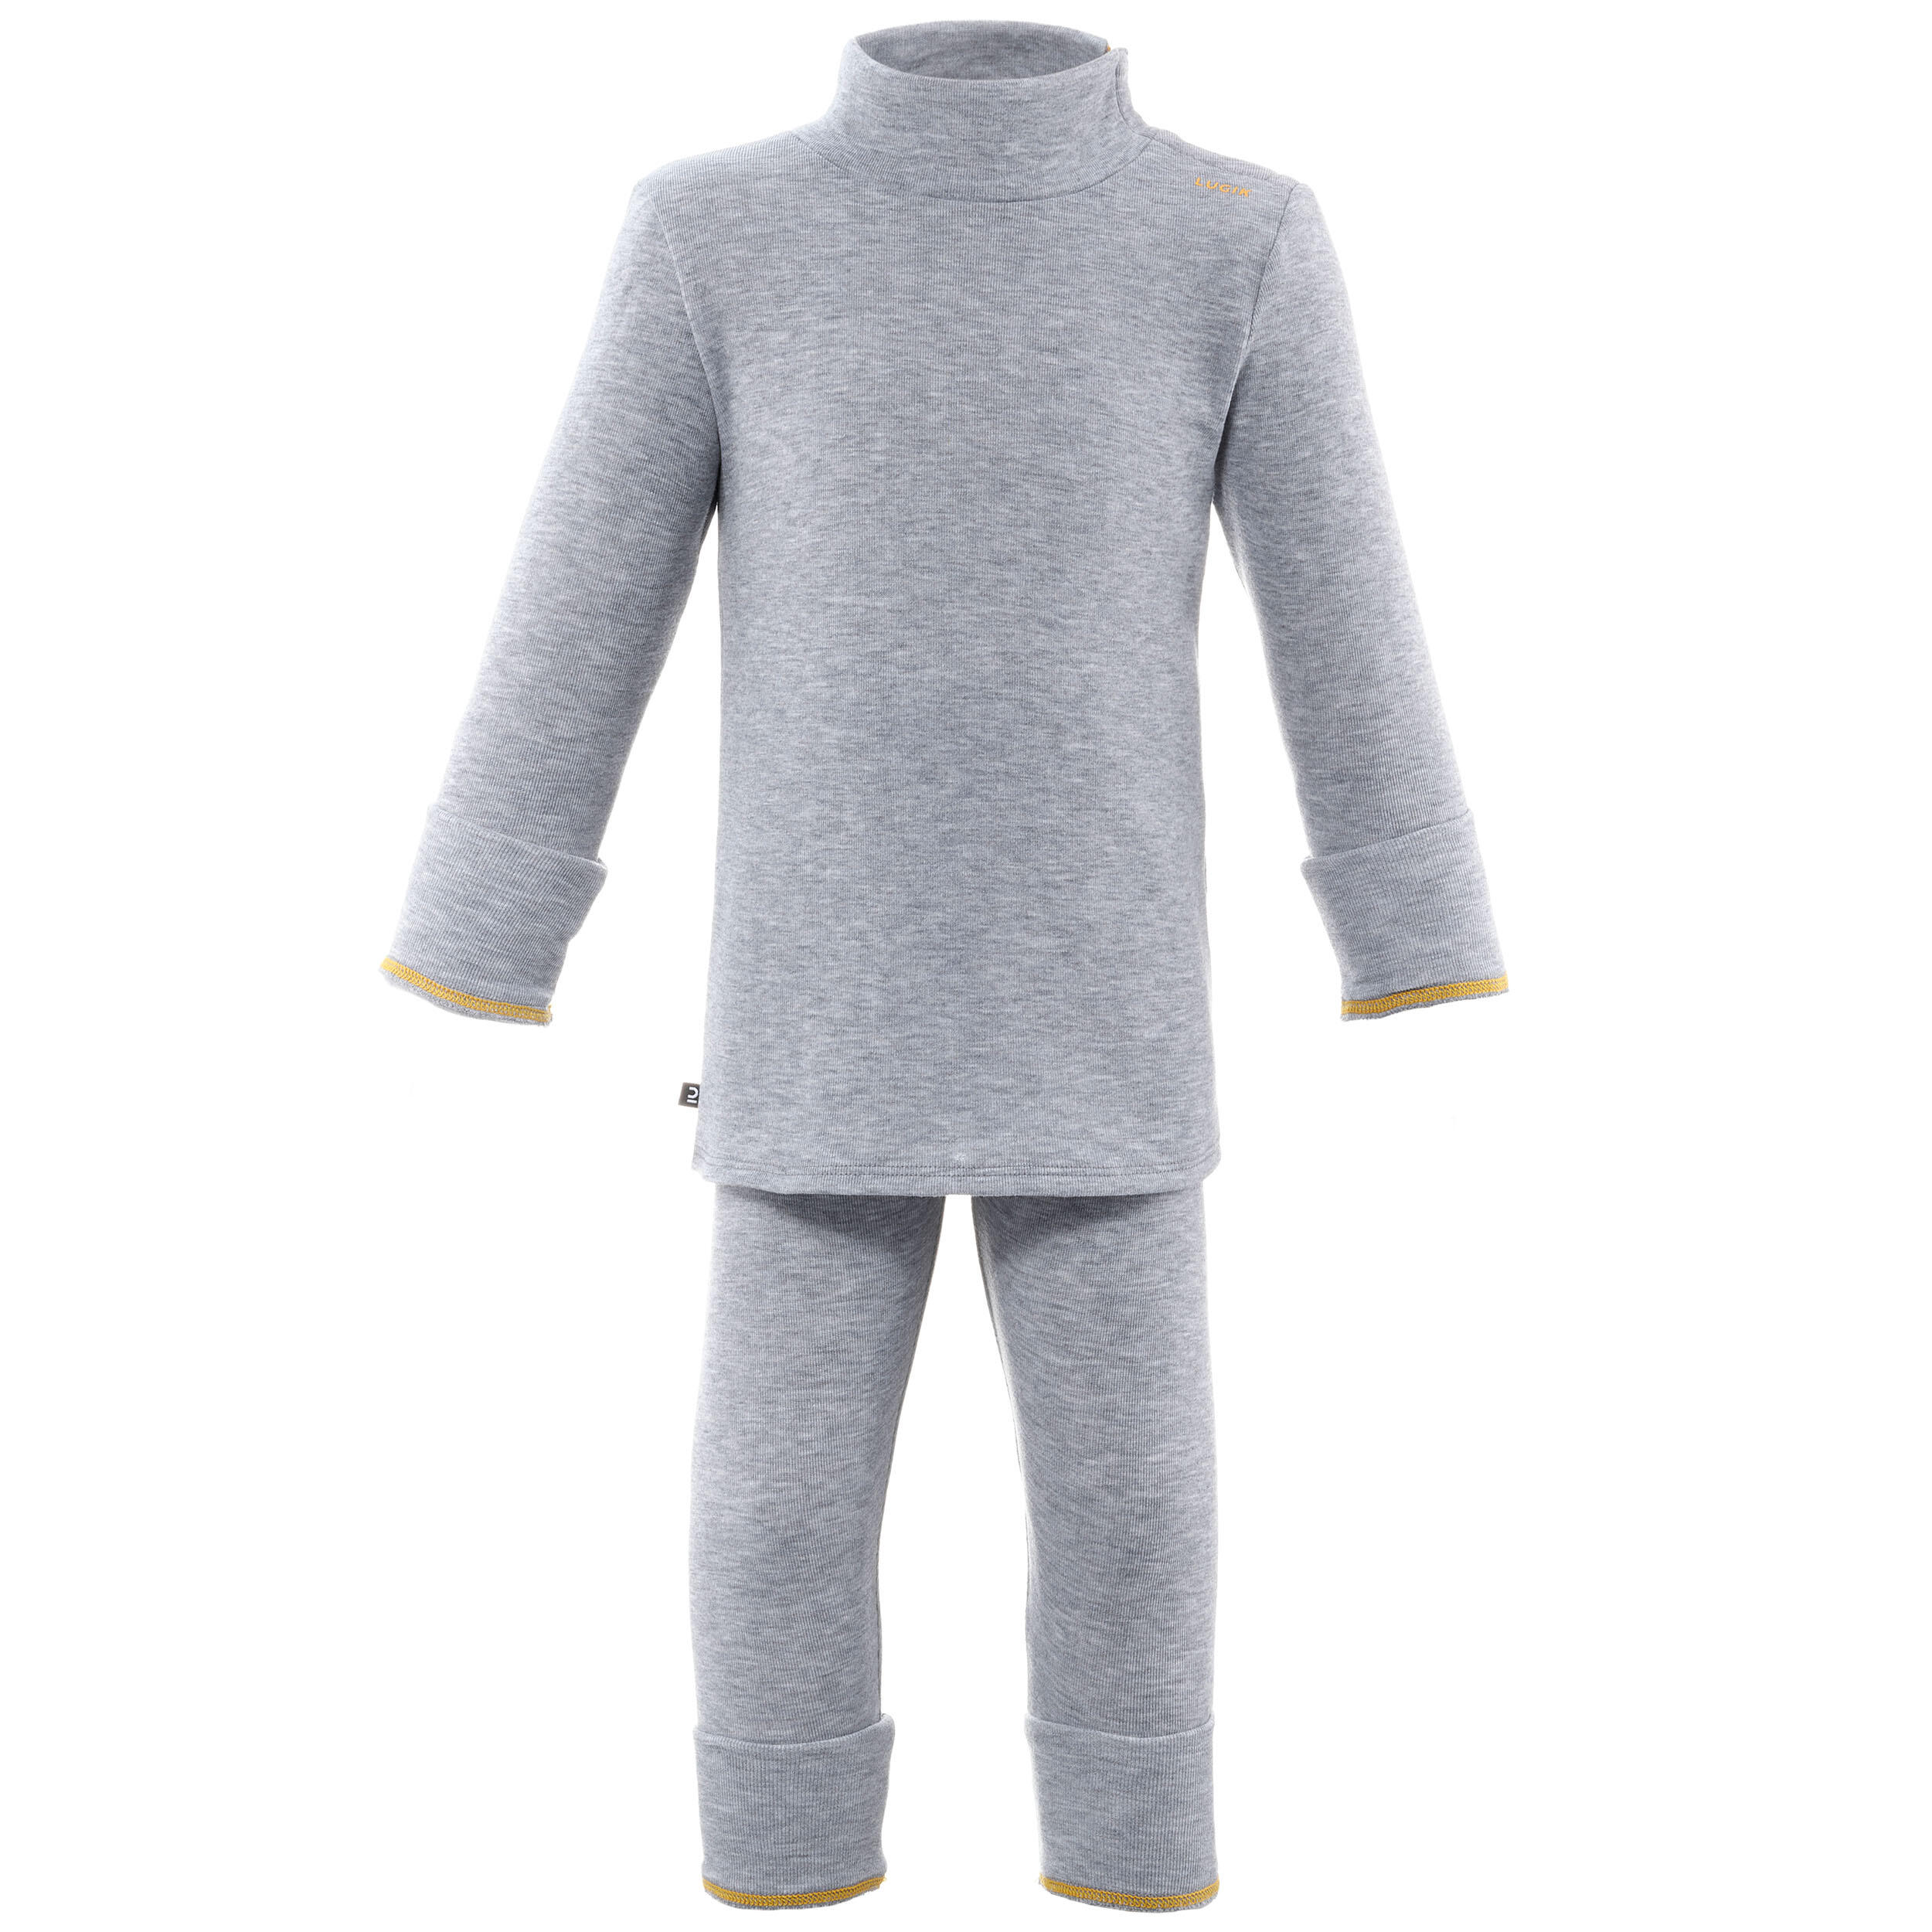 Base layer trousers, Baby ski leggings - WARM grey 10/11